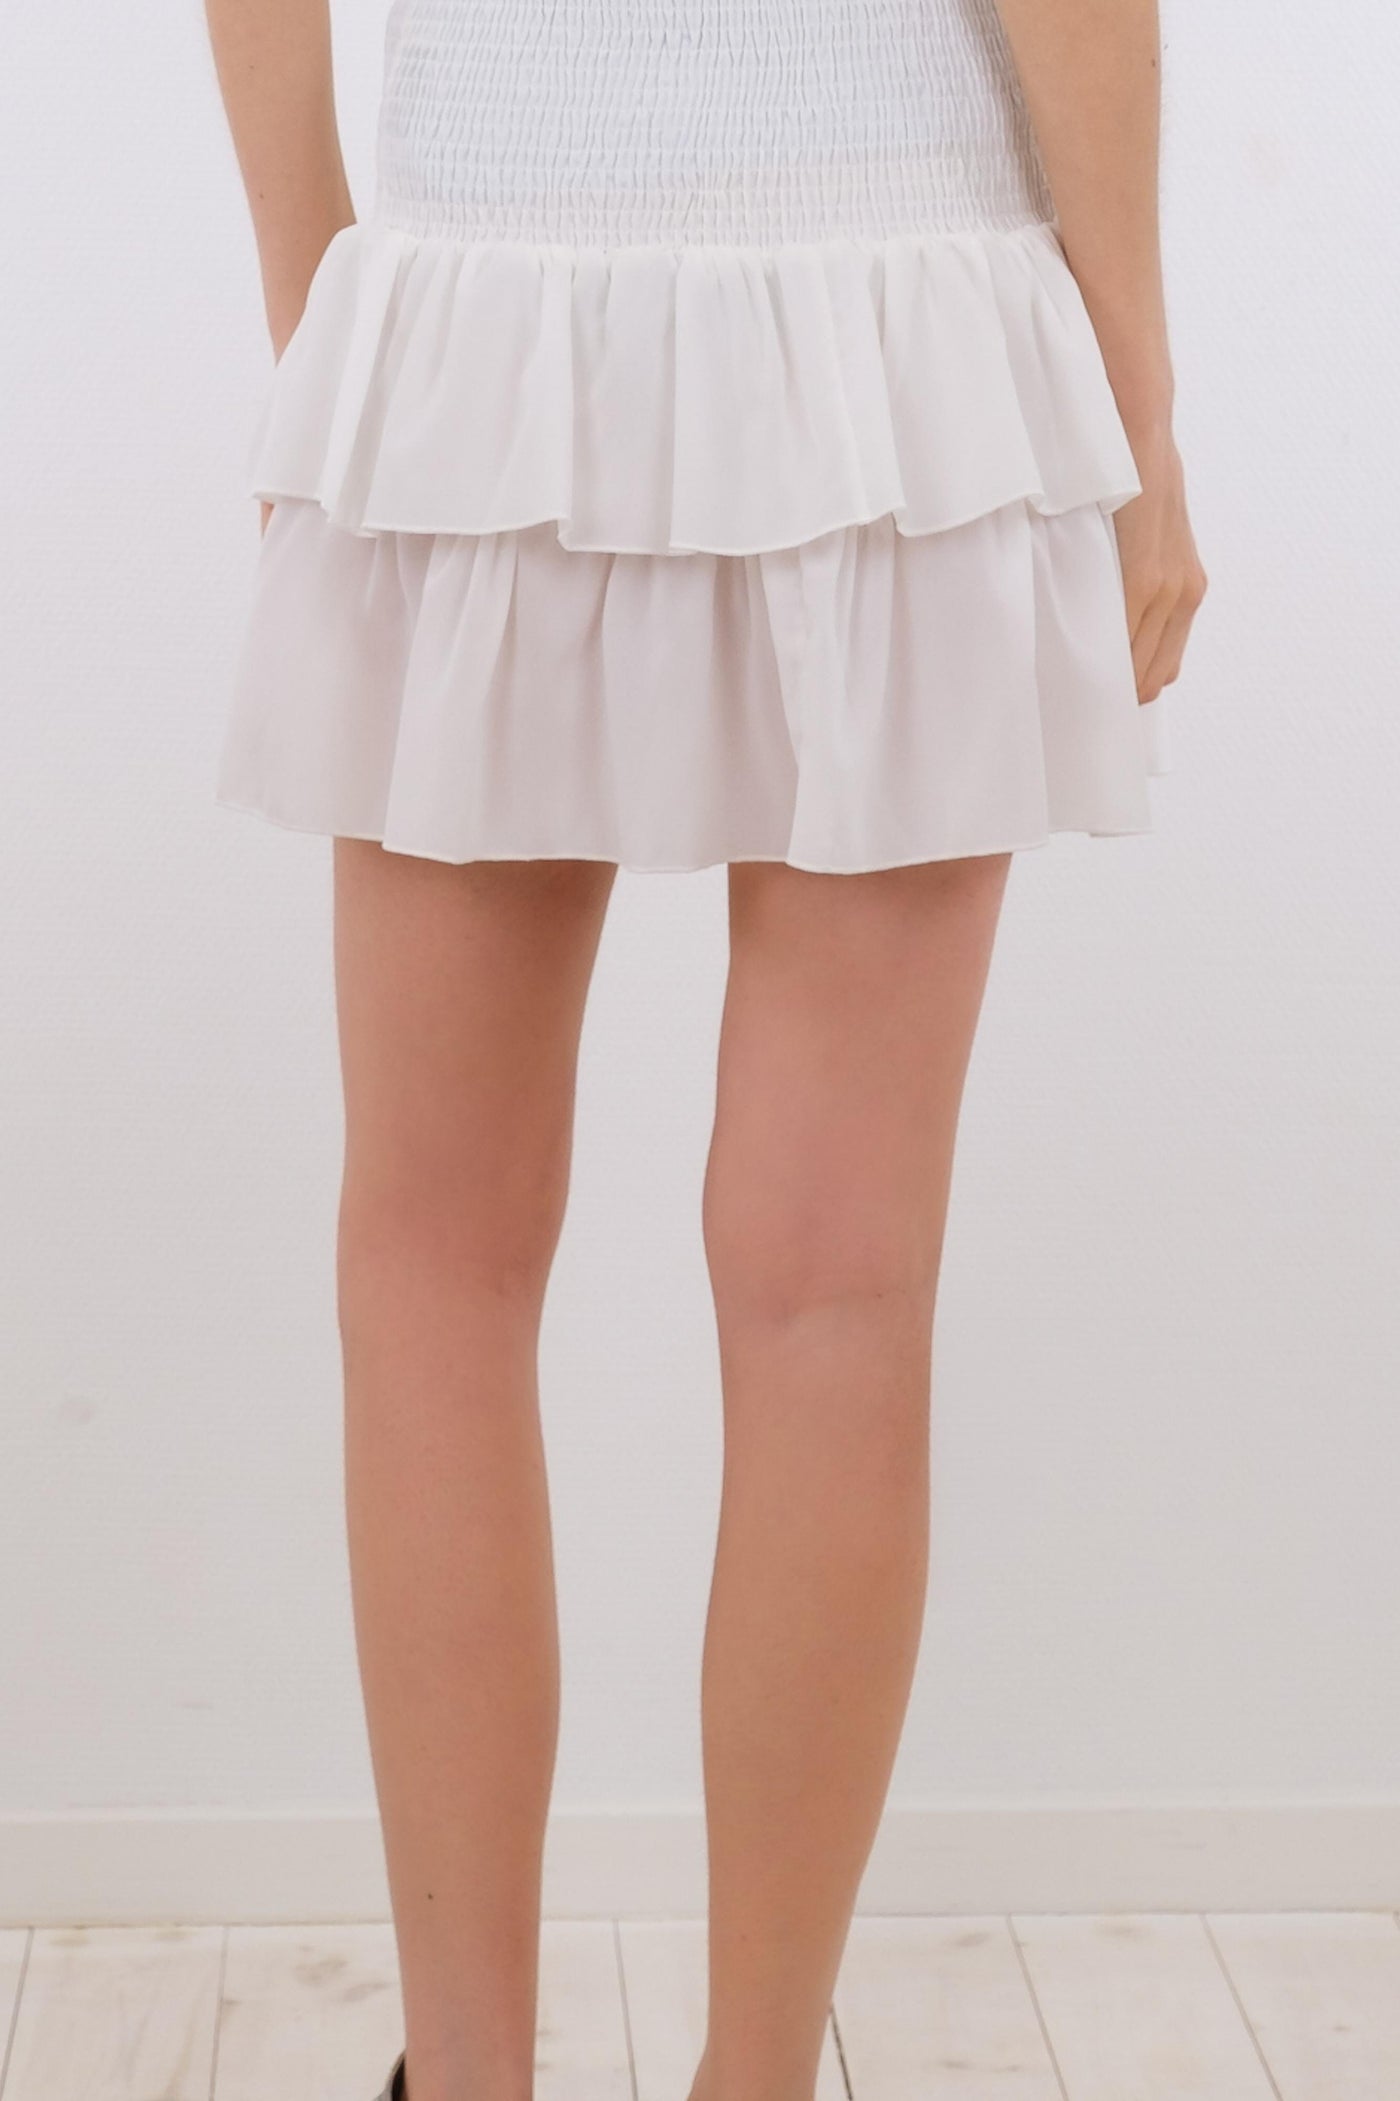 Neo | Carin R Skirt - White » Shop hos Molly&My